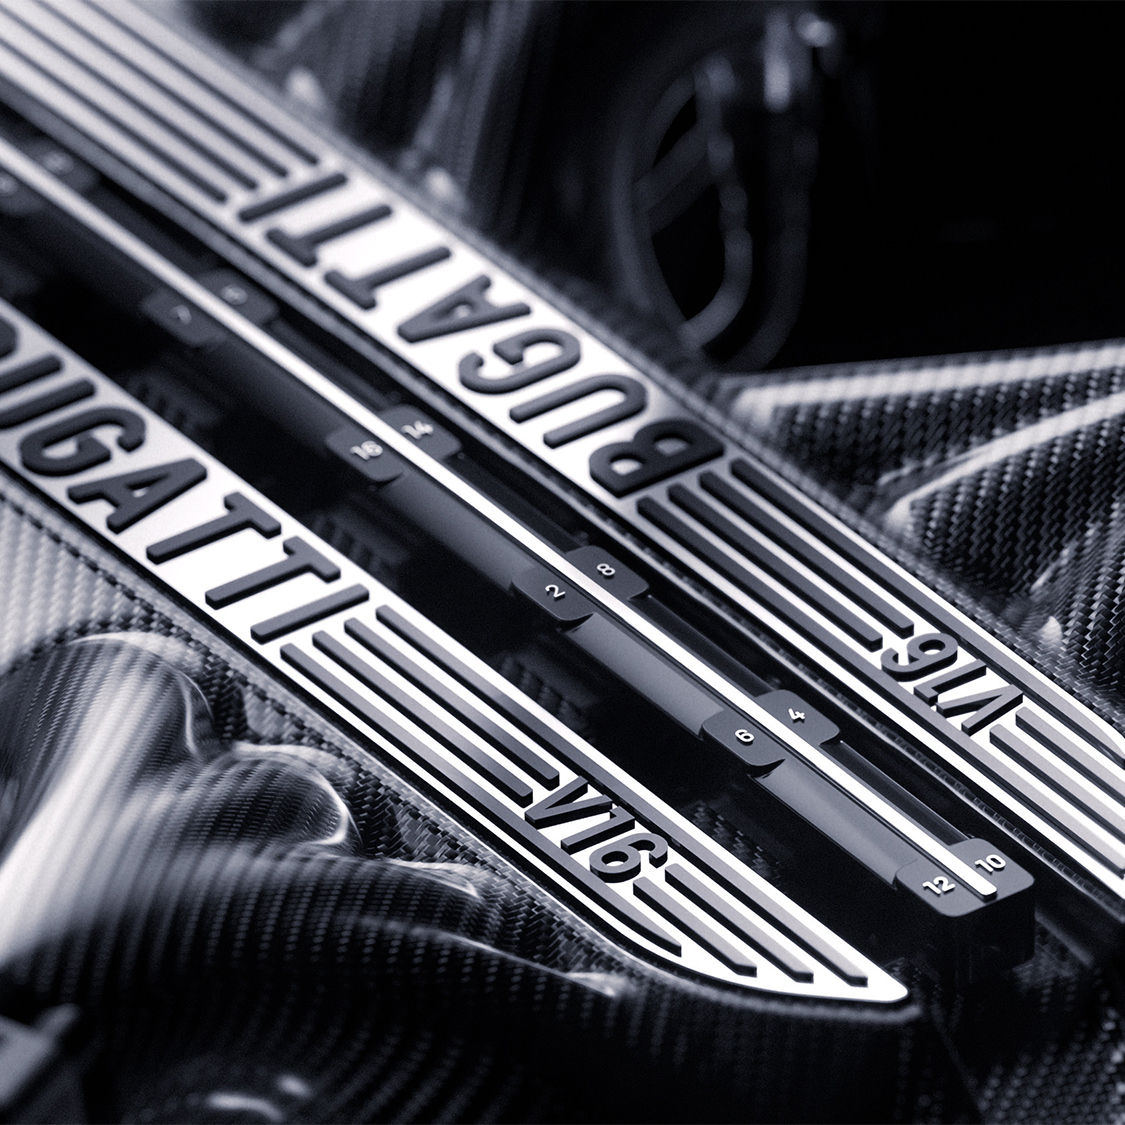 Jacob & Co. Bugatti Chiron Tourbillon Baguette Black and Orange watch info  | Hypebeast